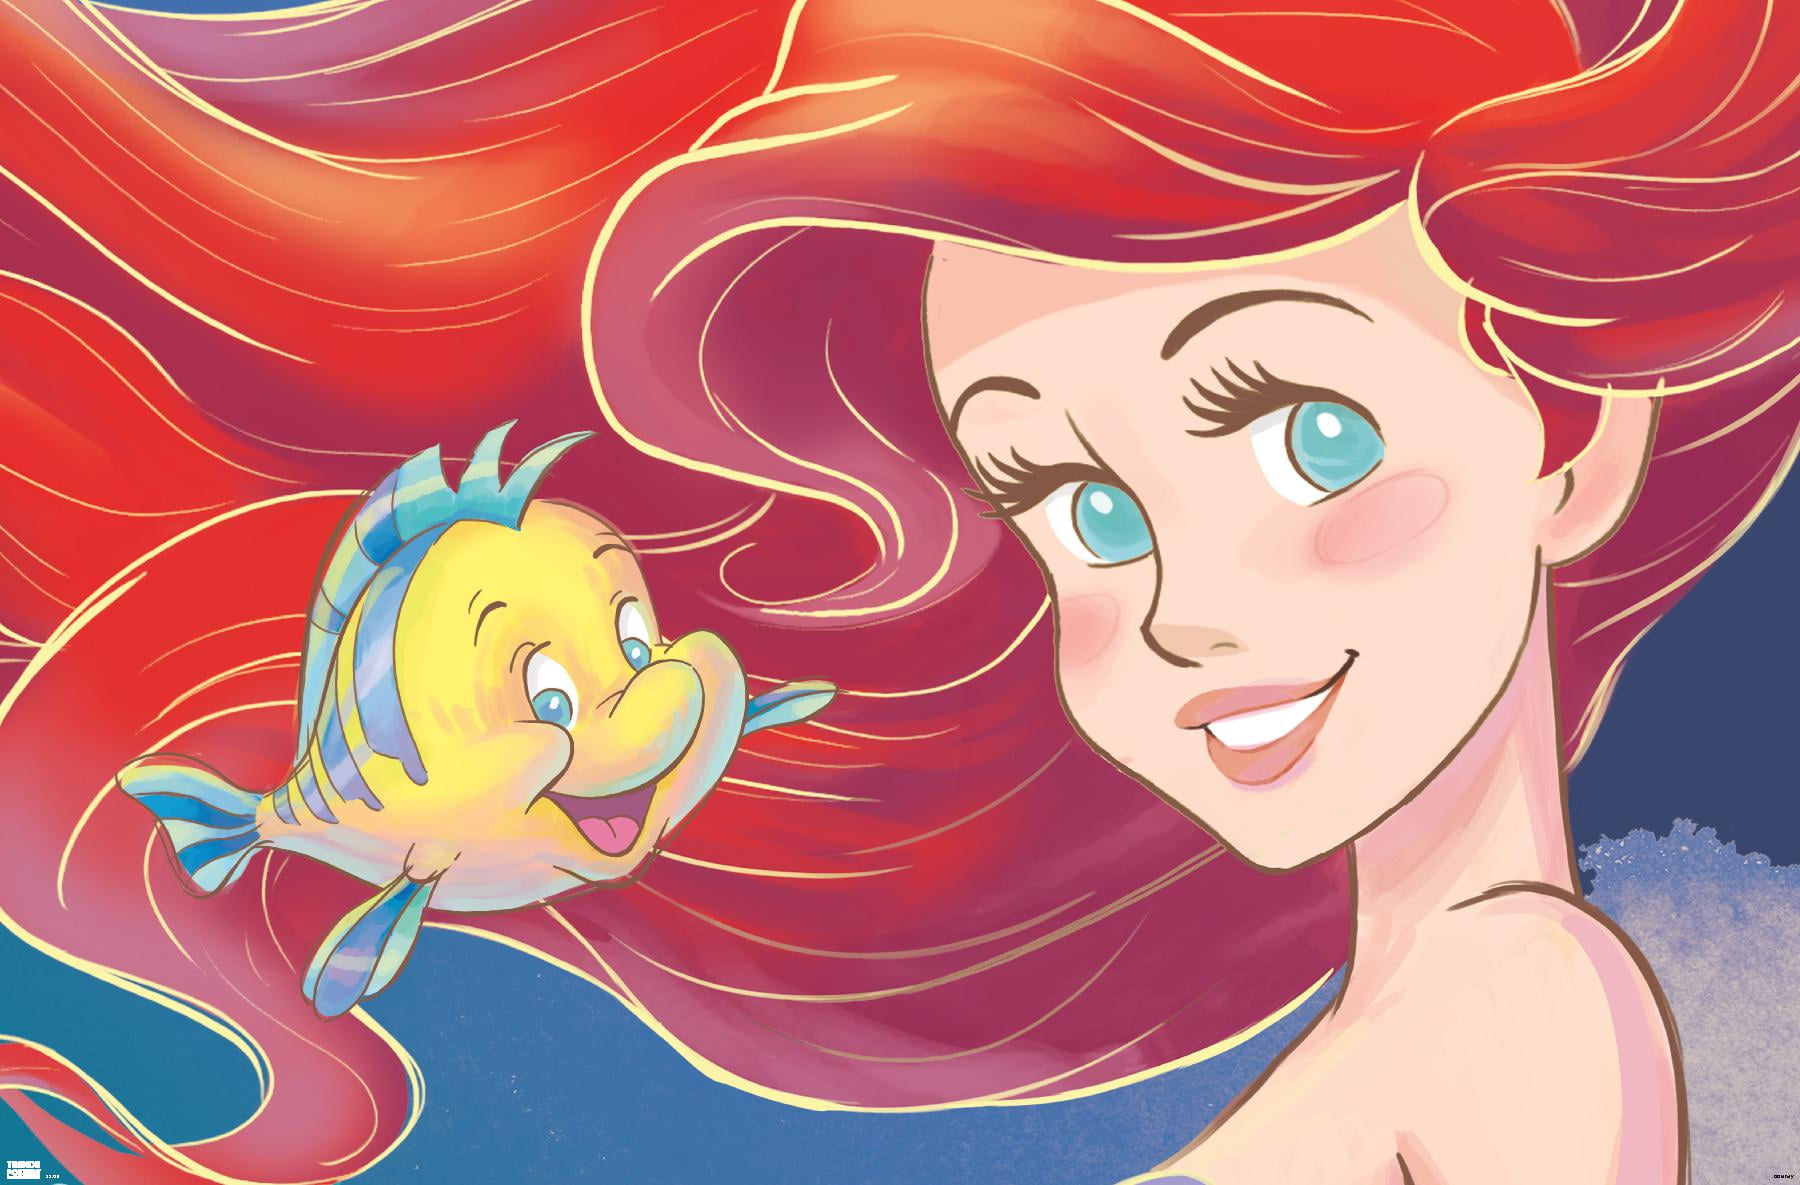 bonnie welsh recommends Pics Of Ariel The Little Mermaid